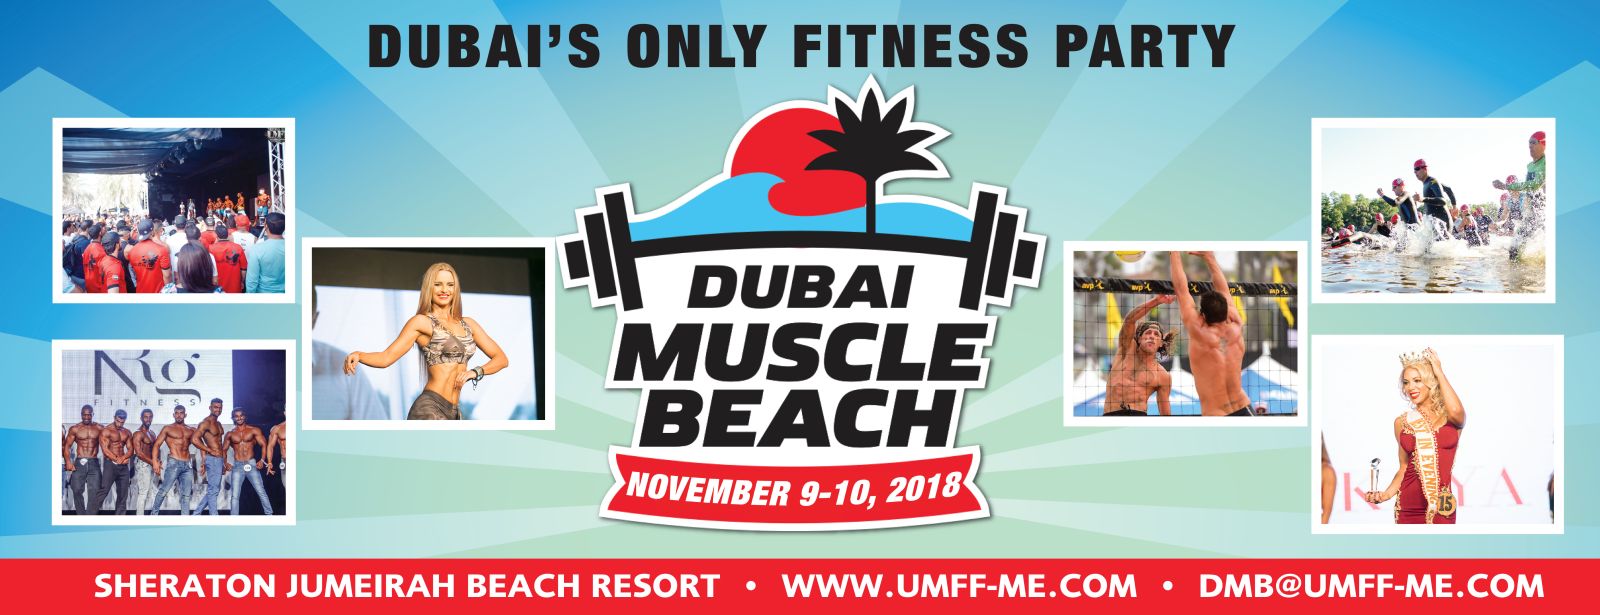 Dubai Muscle Beach 2018 - Coming Soon in UAE